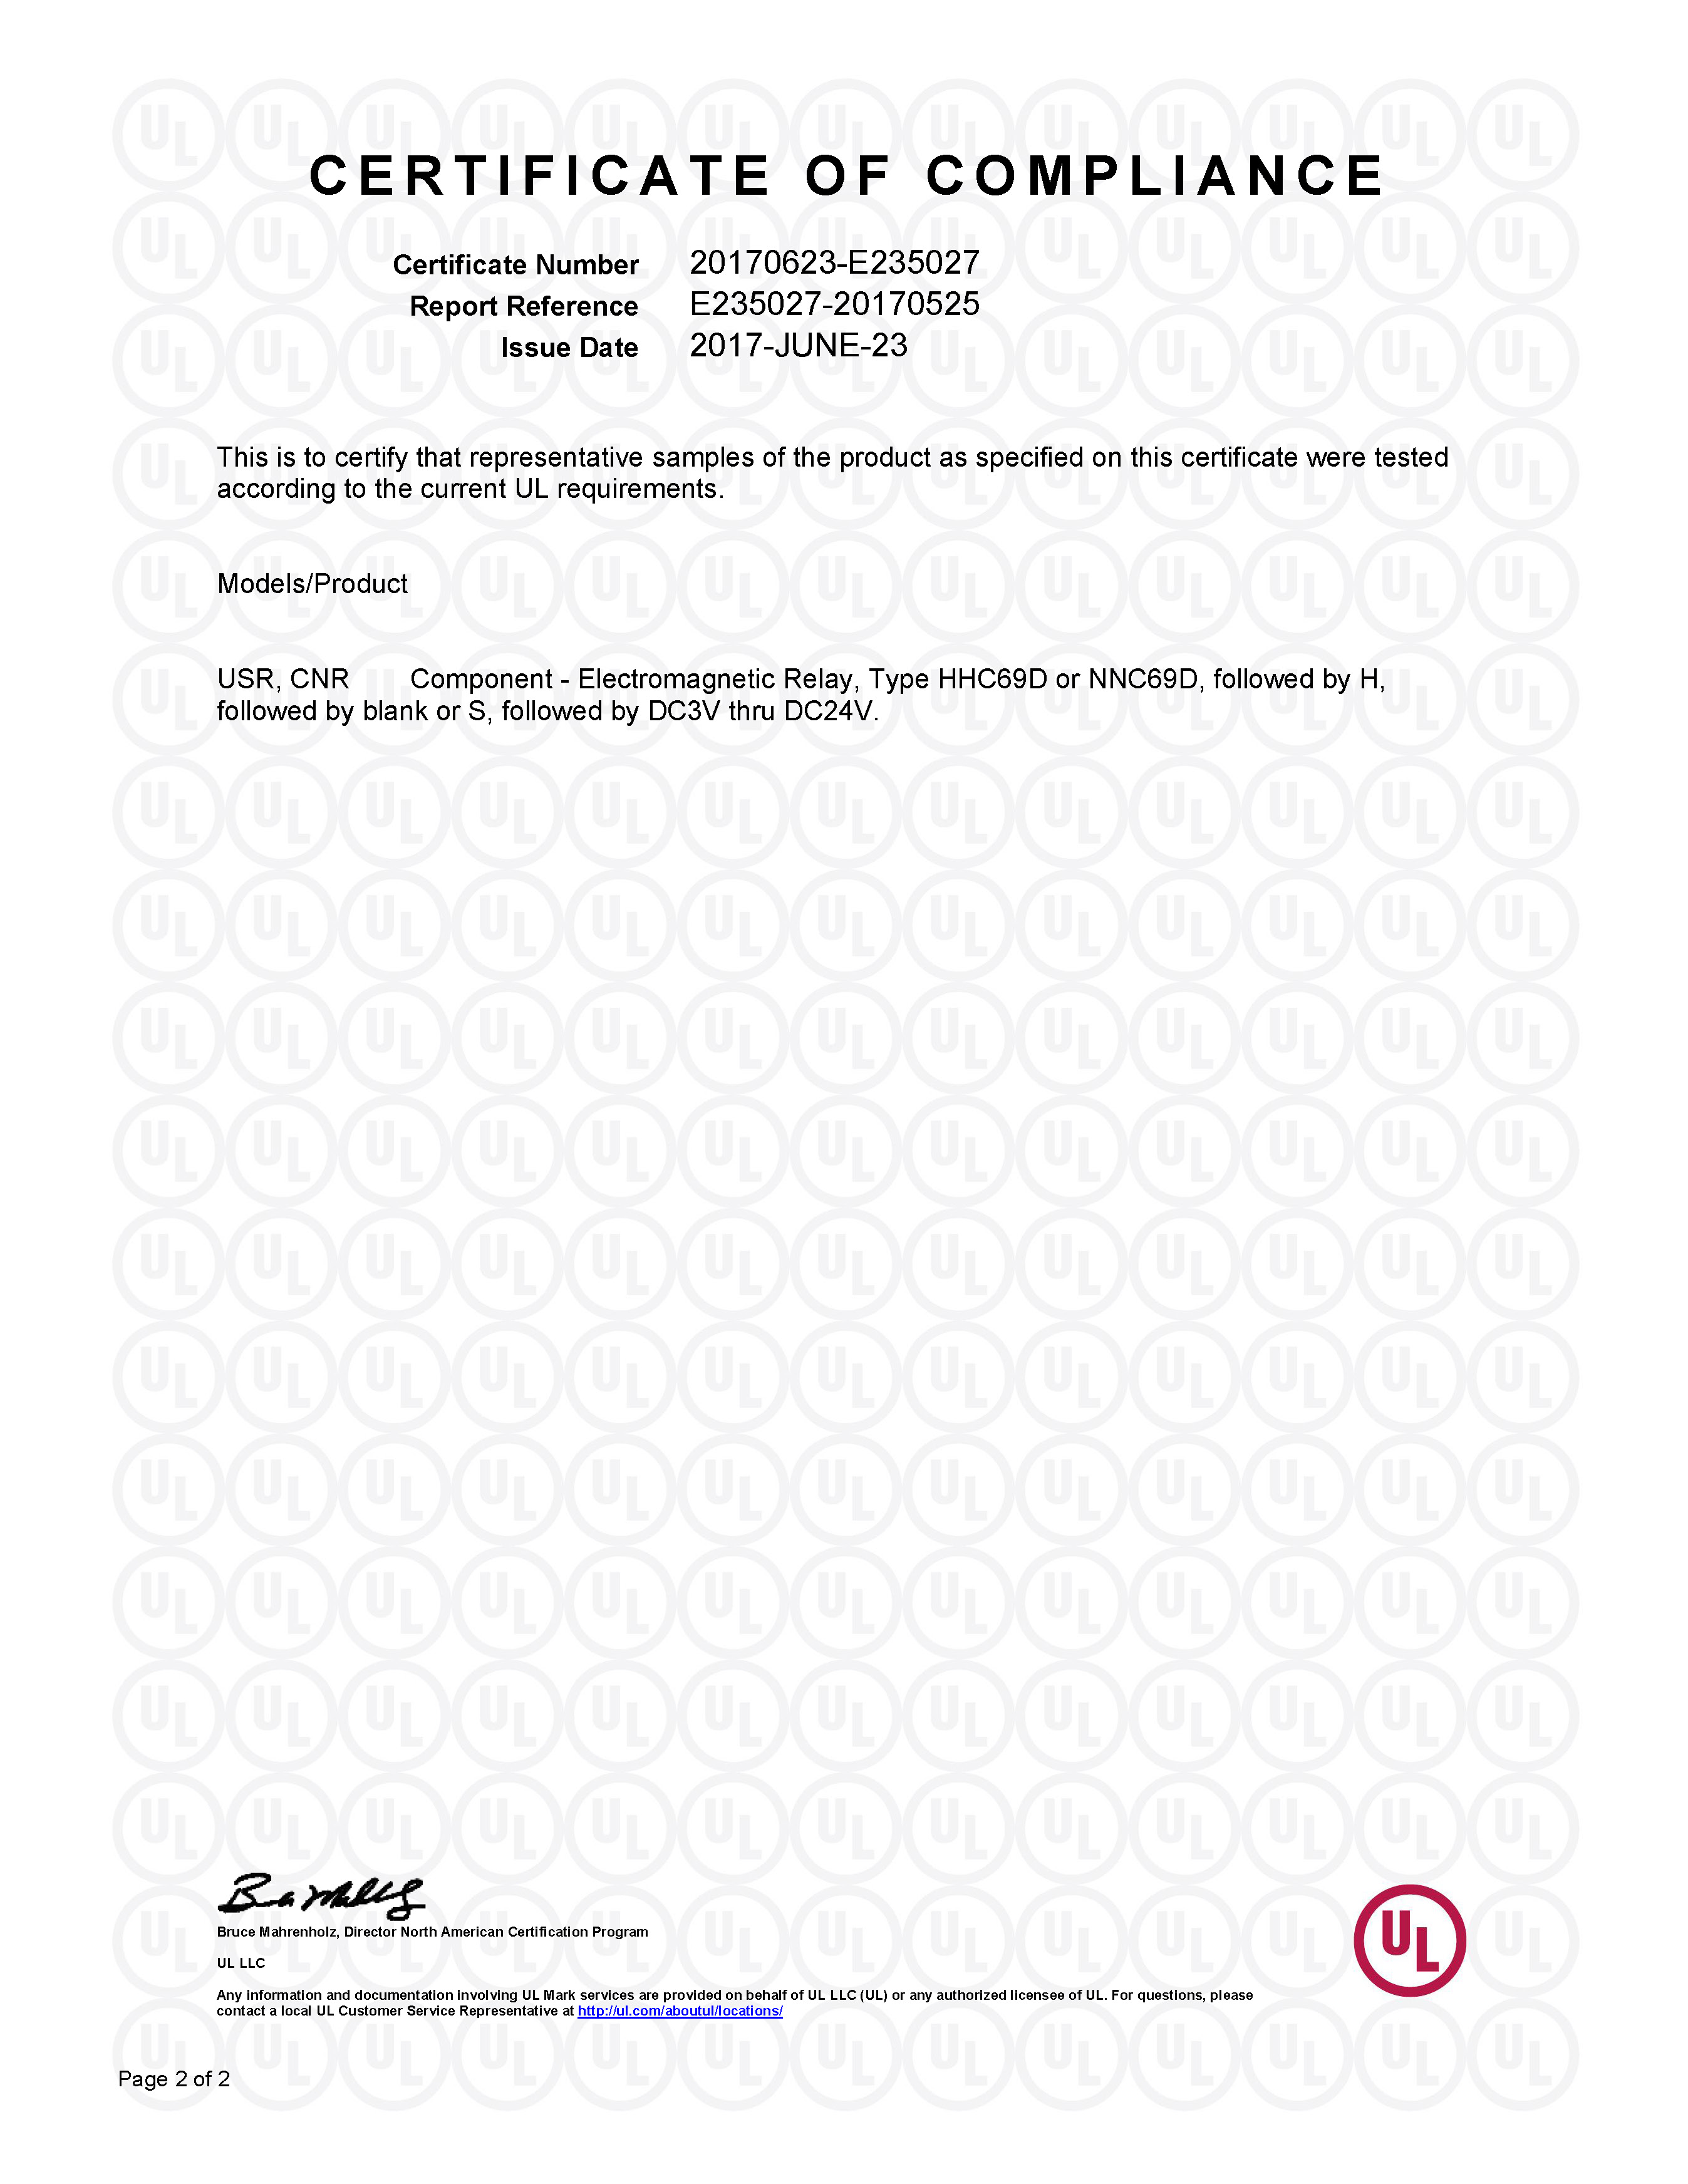 E235027-20170525-CertificateofCompliance_页面_2